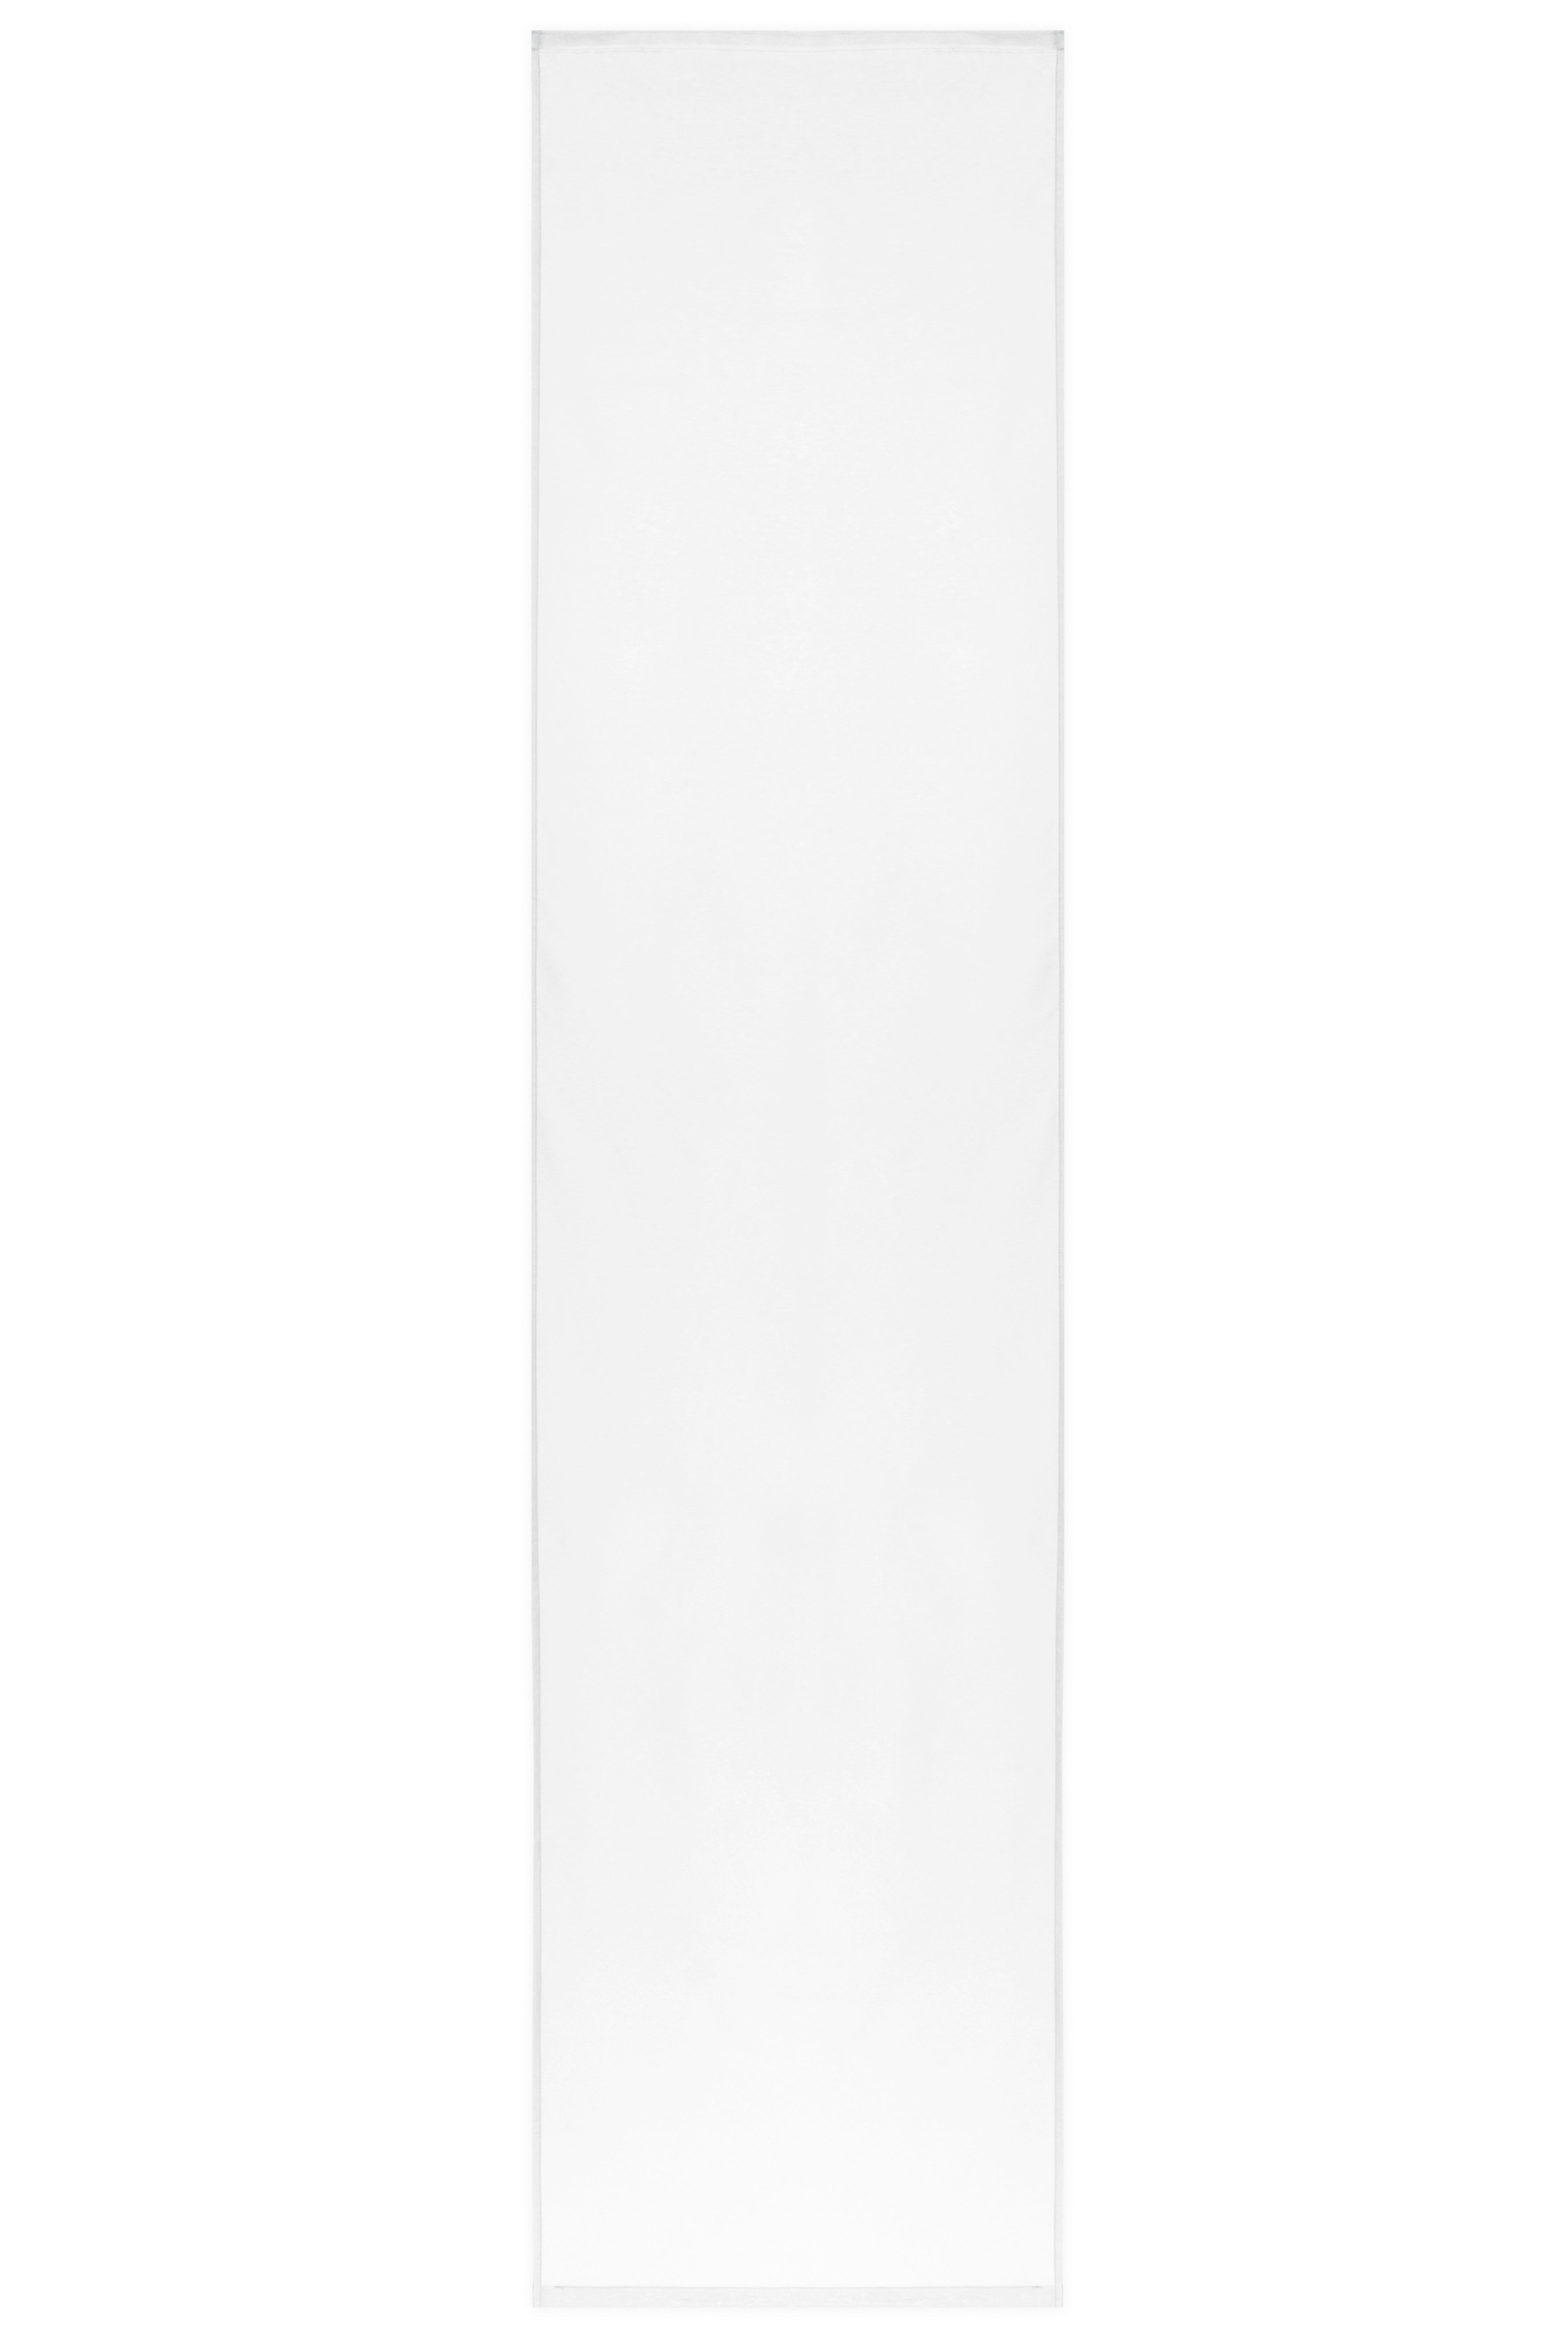 Schiebevorhang Pearl weiß B/L: ca. 60x245 cm Pearl - weiß (60,00/245,00cm)